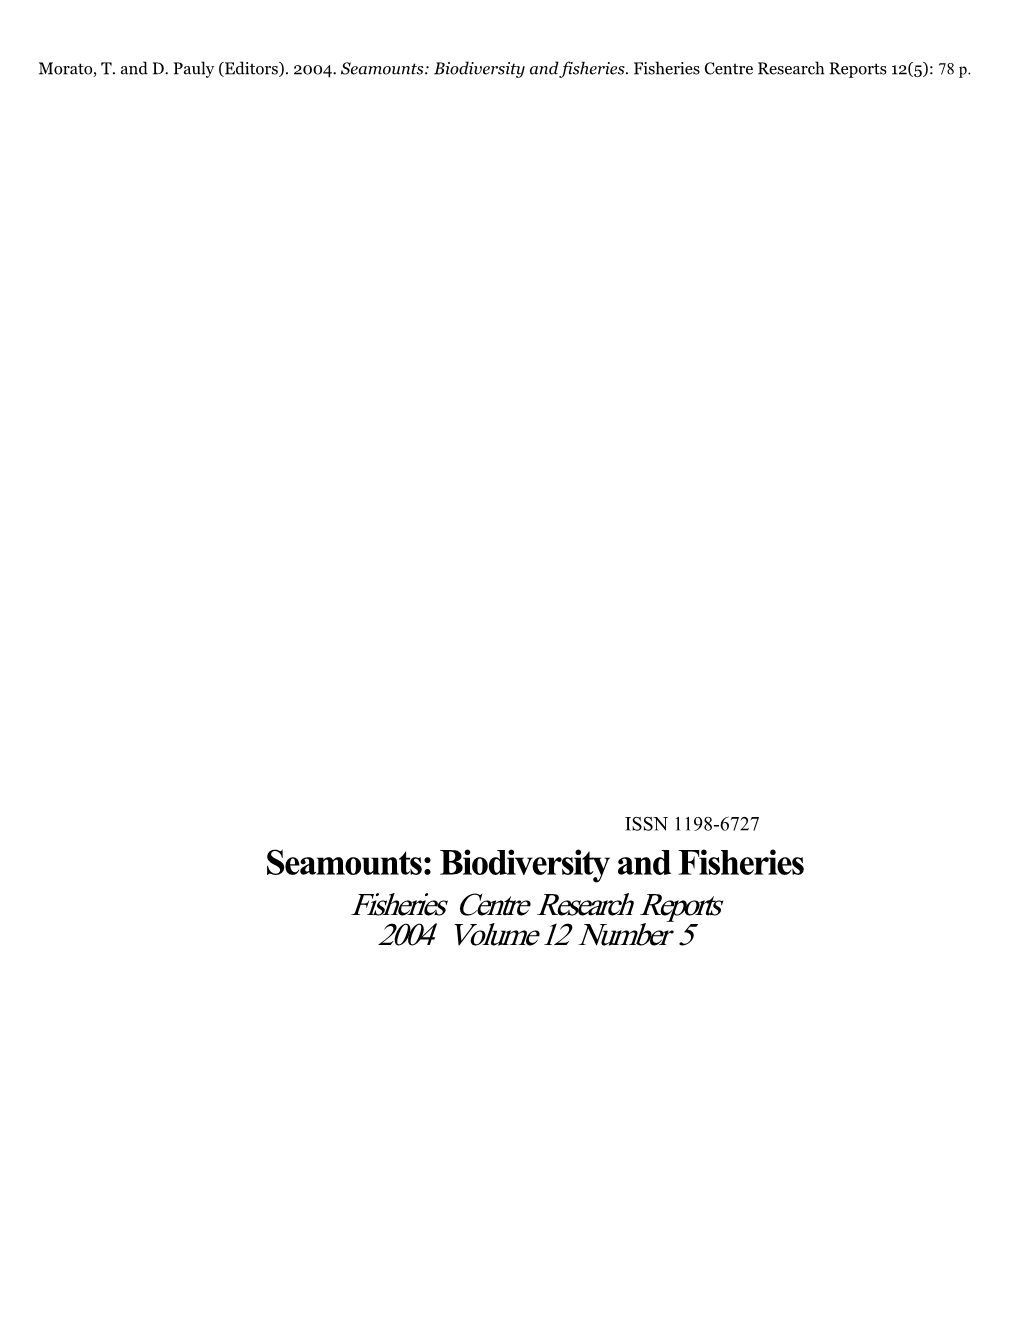 Seamounts: Biodiversity and Fisheries